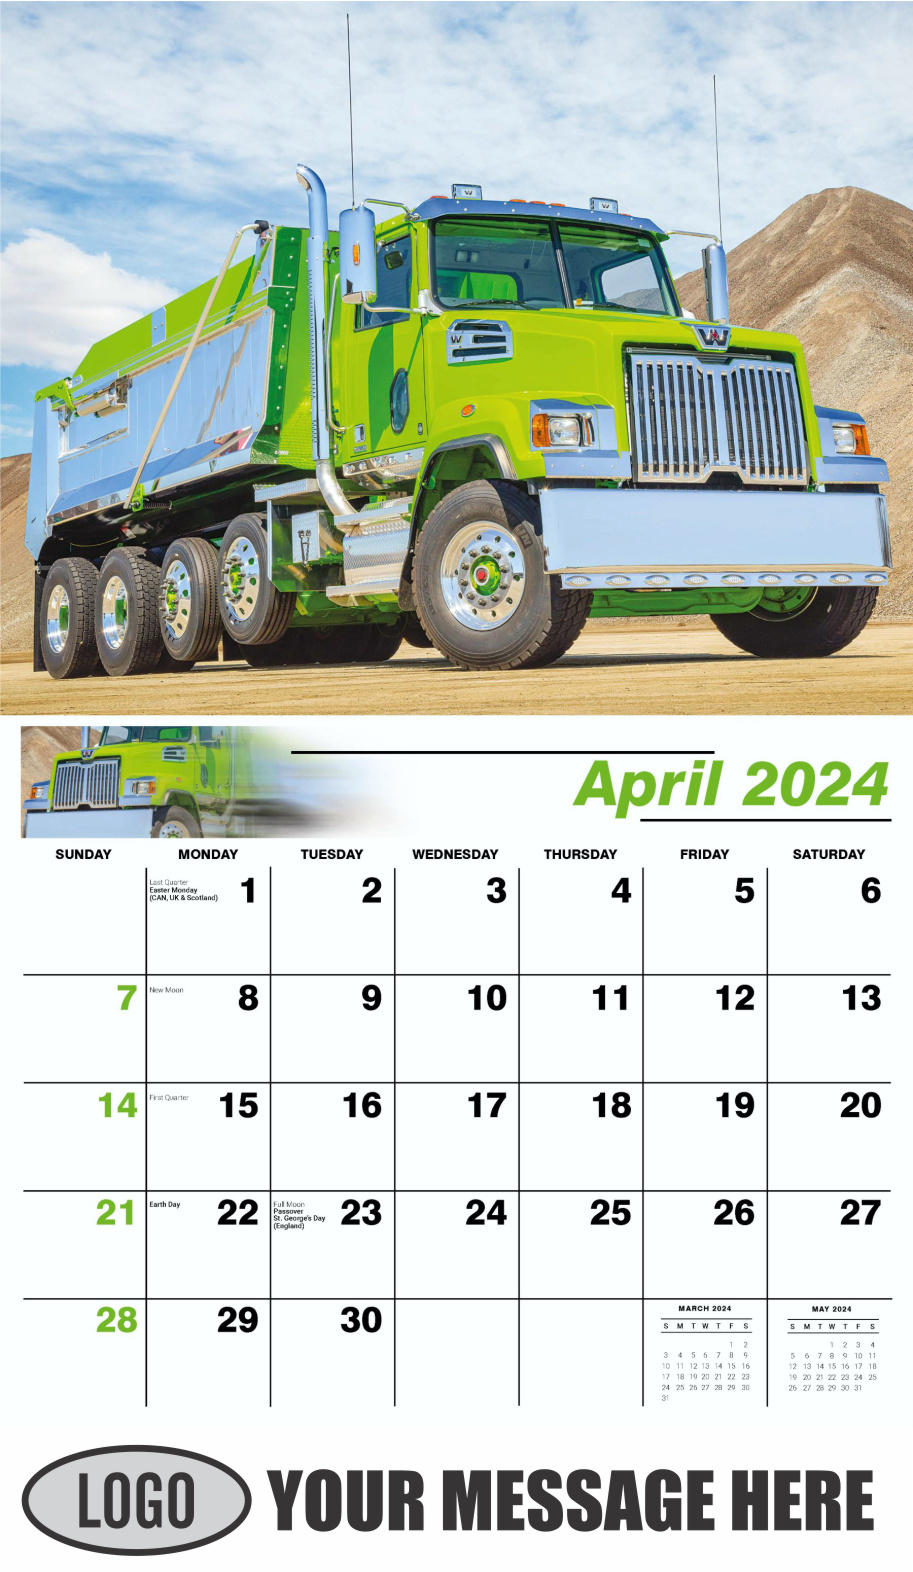 Kings of the Road 2024 Automotive Business Promotional Calendar - April